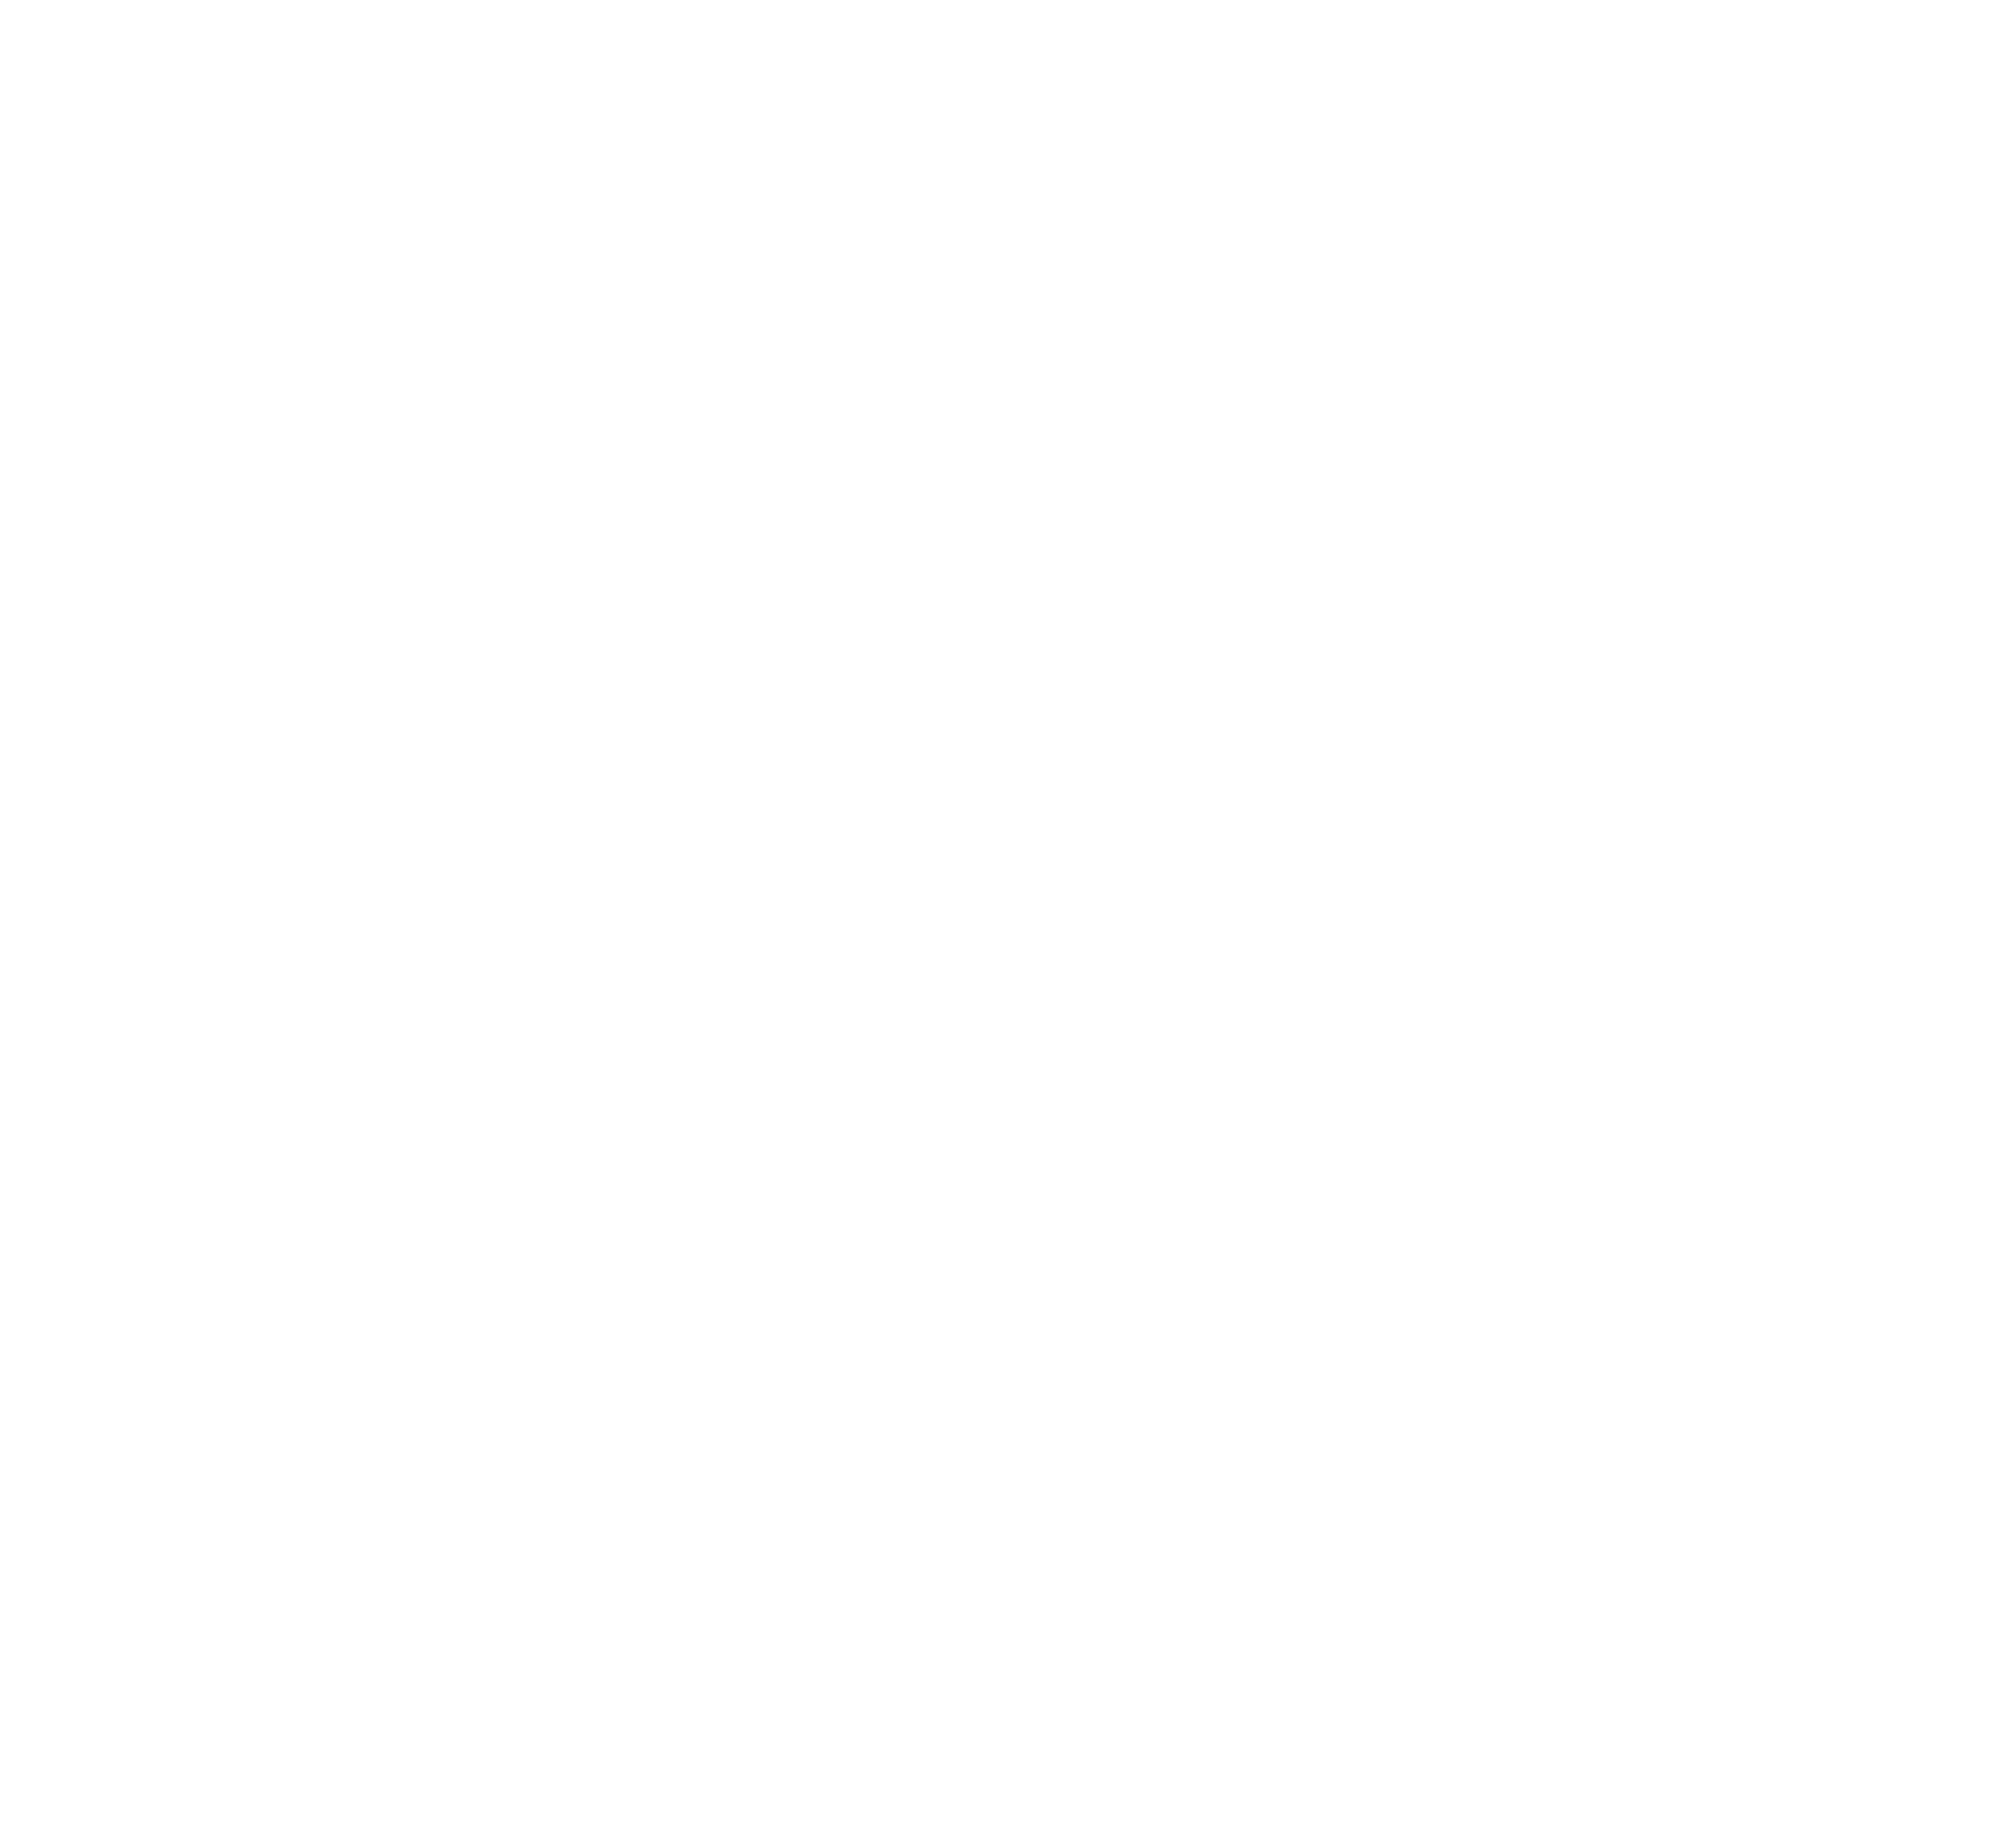 Sentinel Response